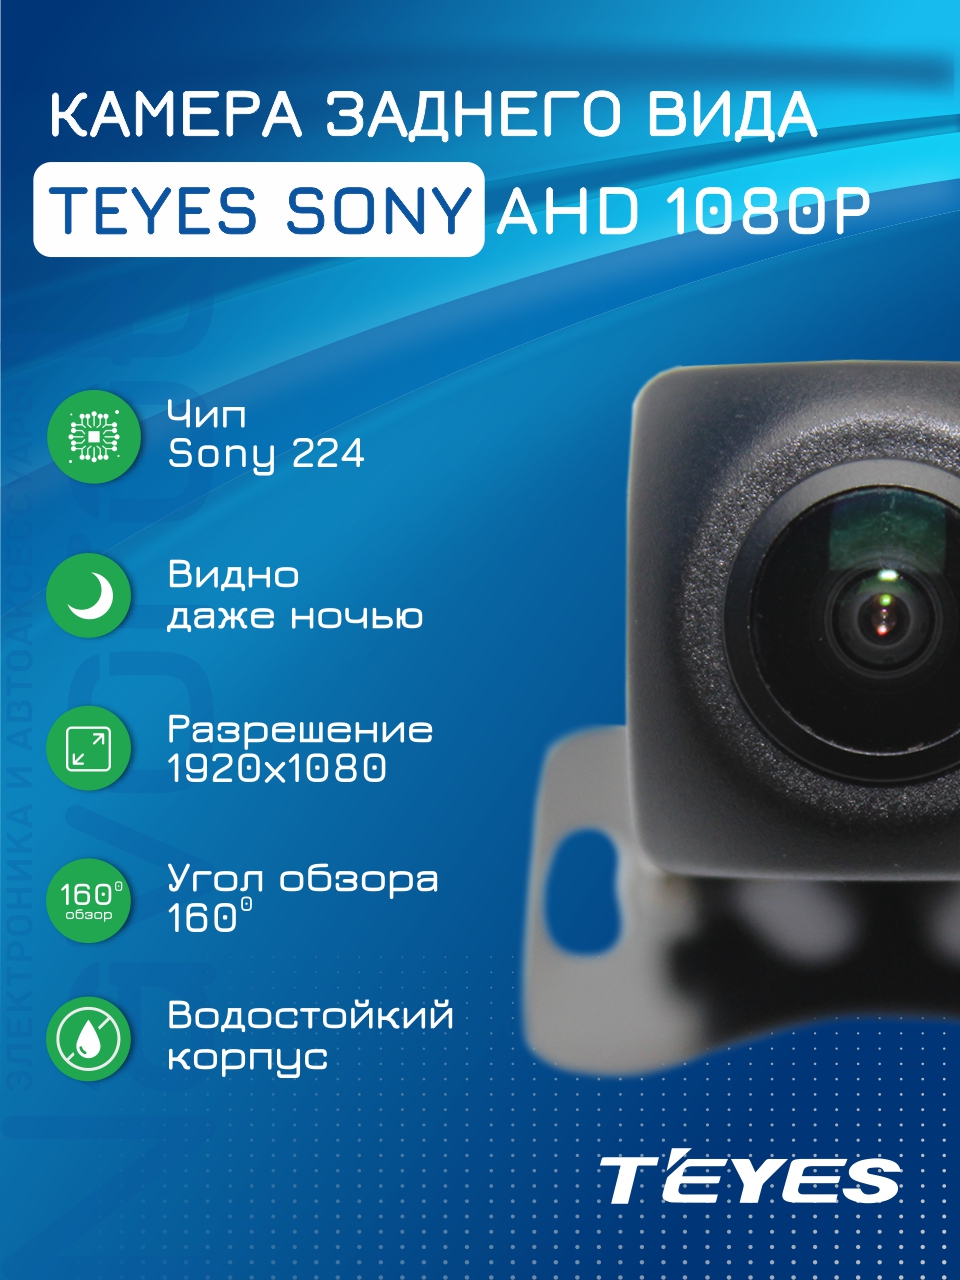 Камера автомобильная Teyes SONY AHD 1080P, широкоугольная